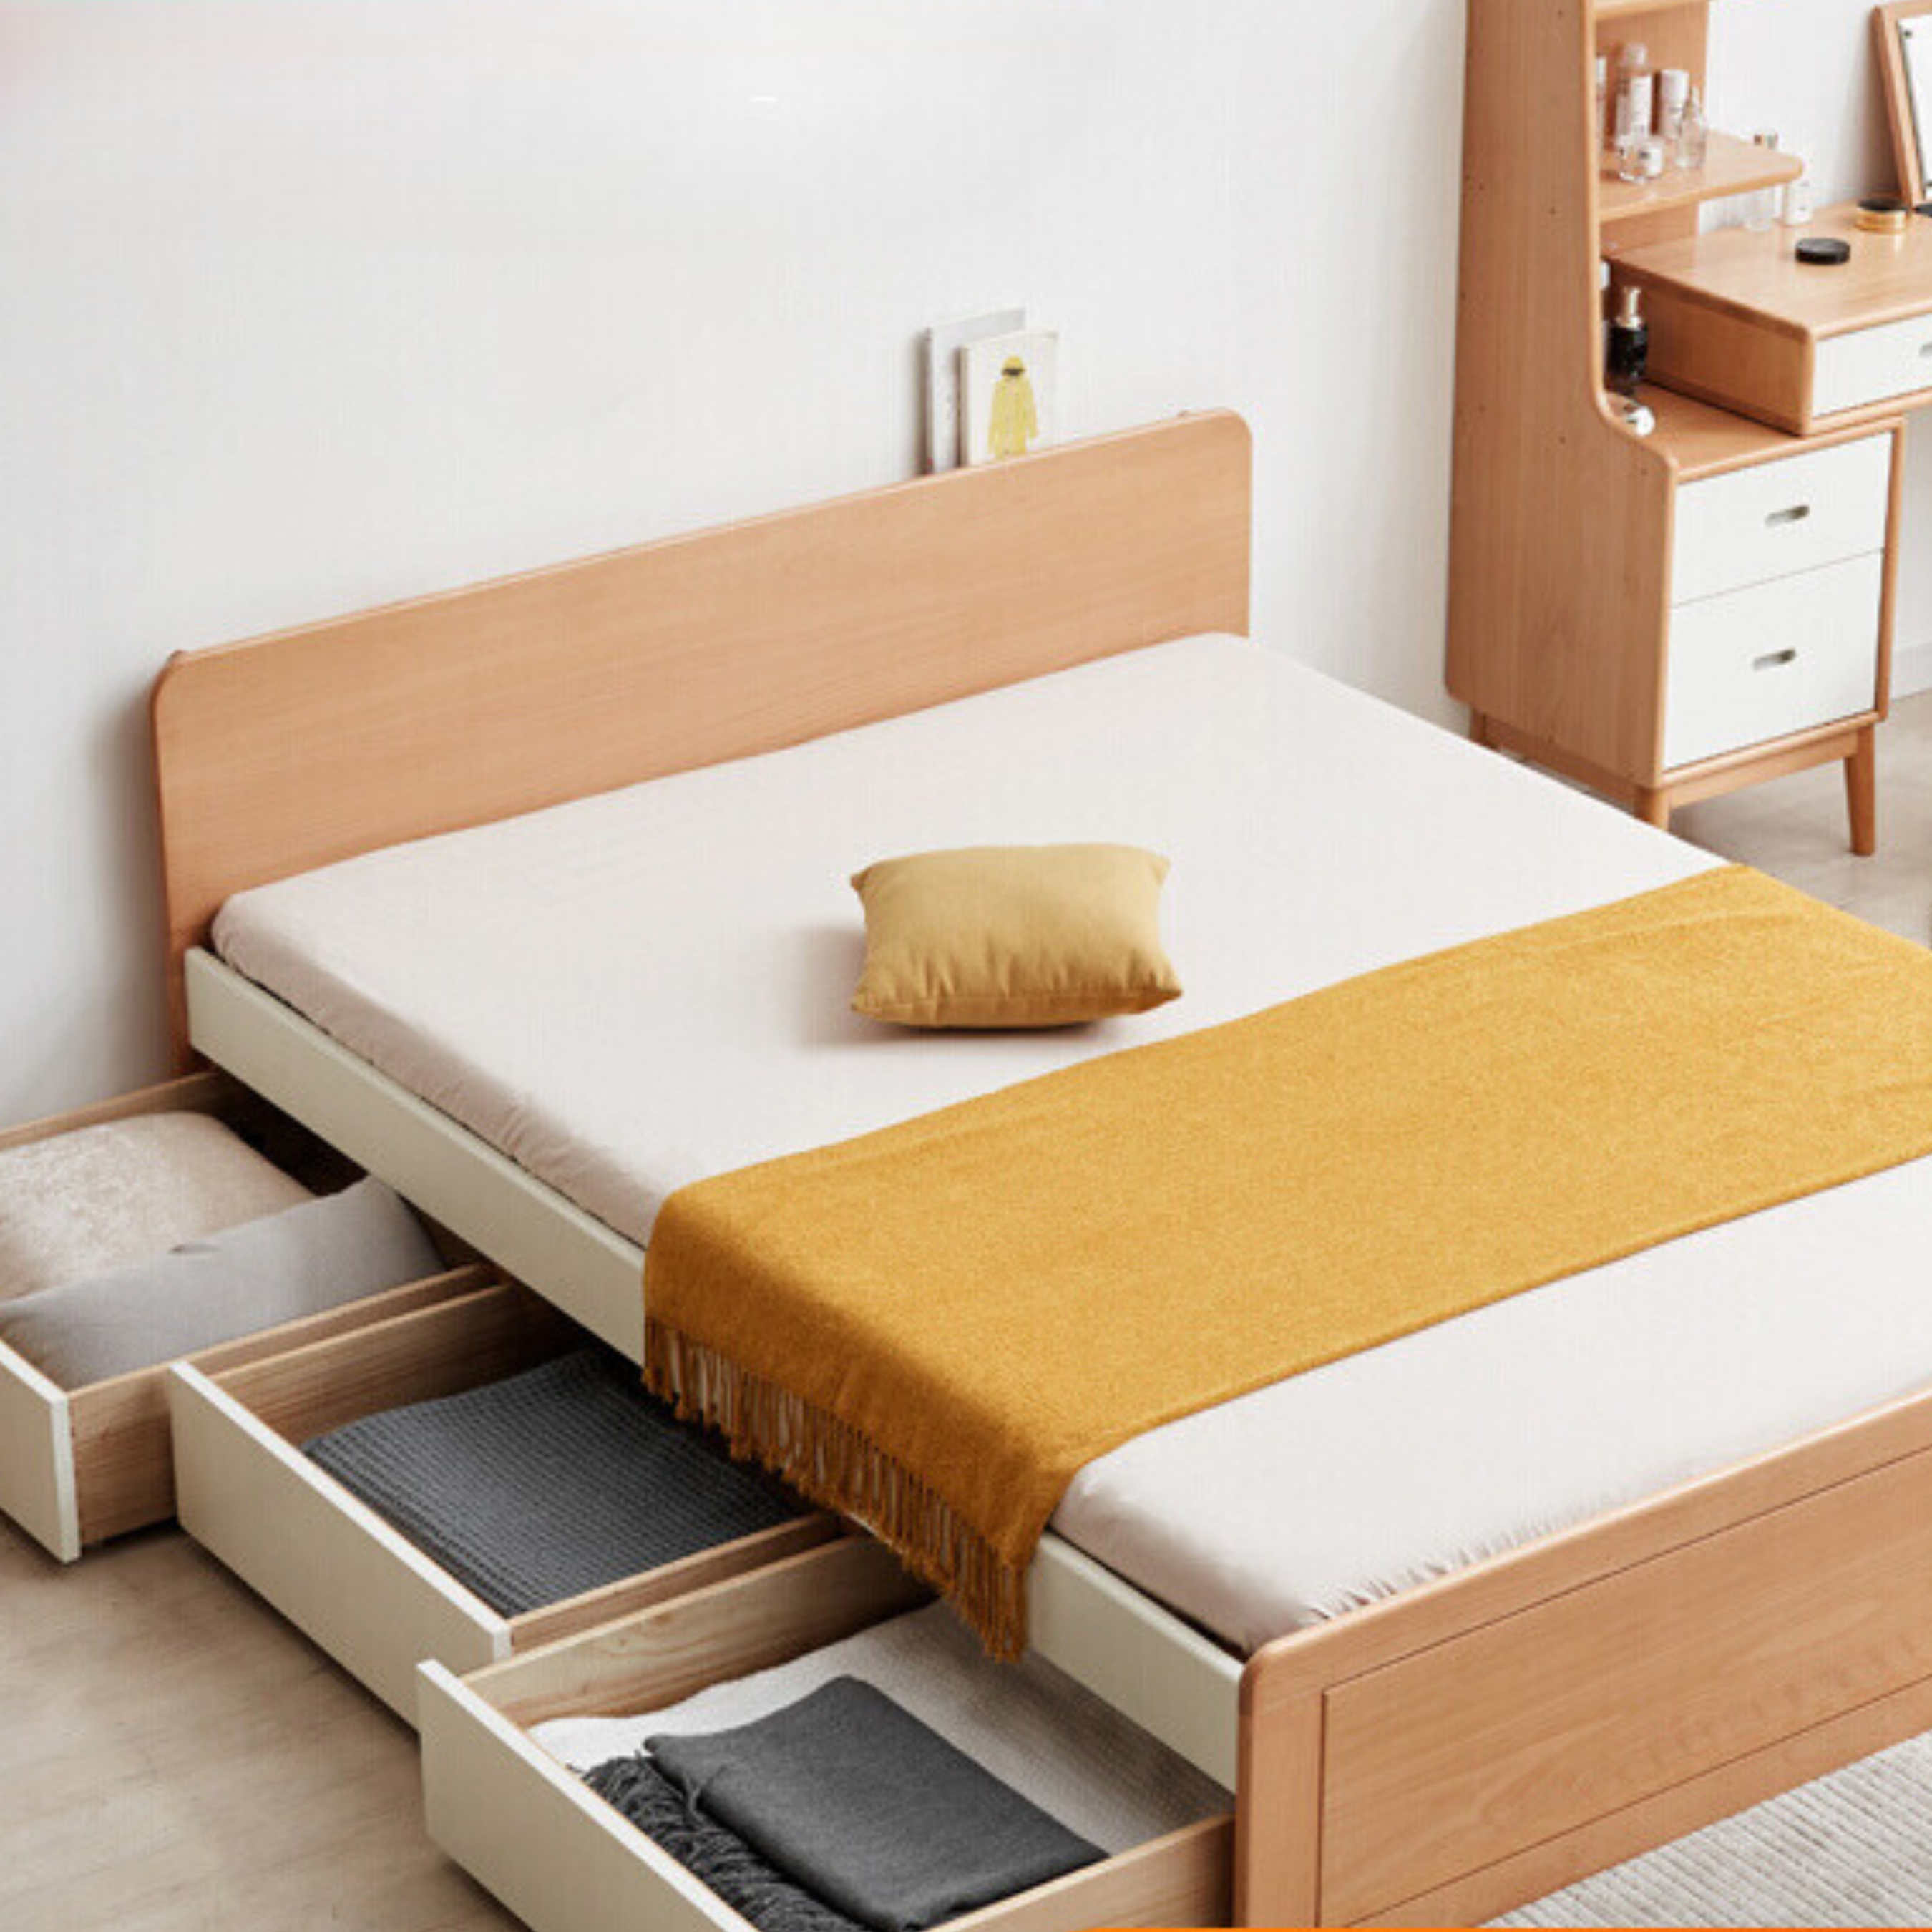 European Beech solid wood Drawer Storage Bed"